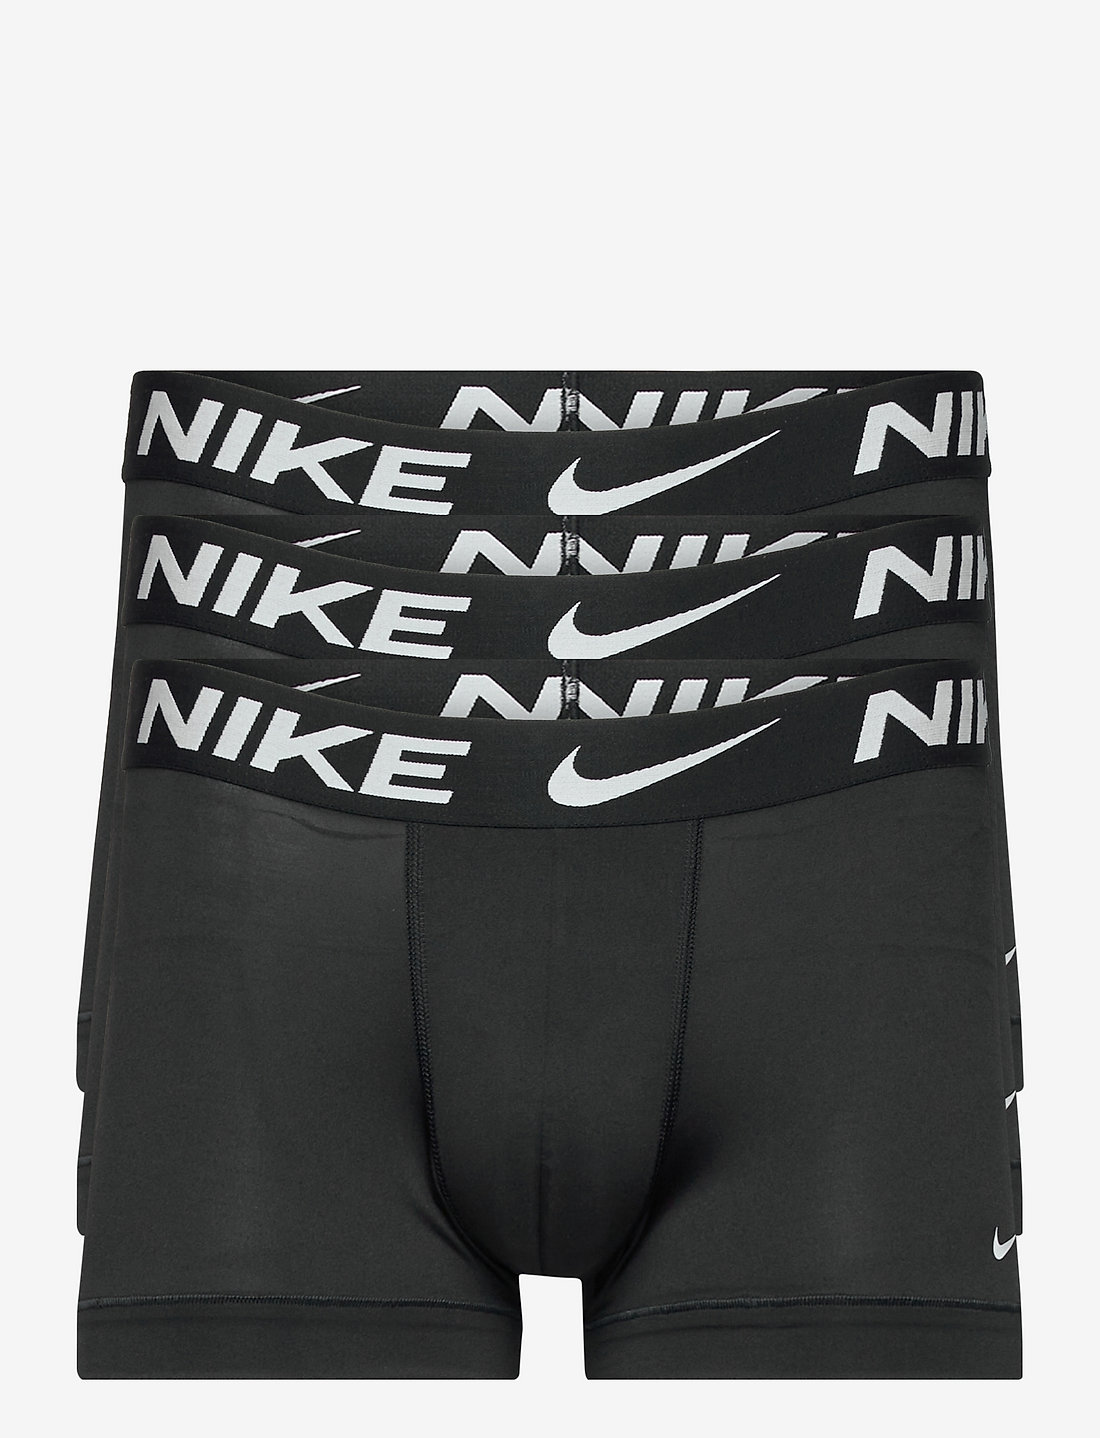 NIKE Underwear Trunk 3pk - Boxers